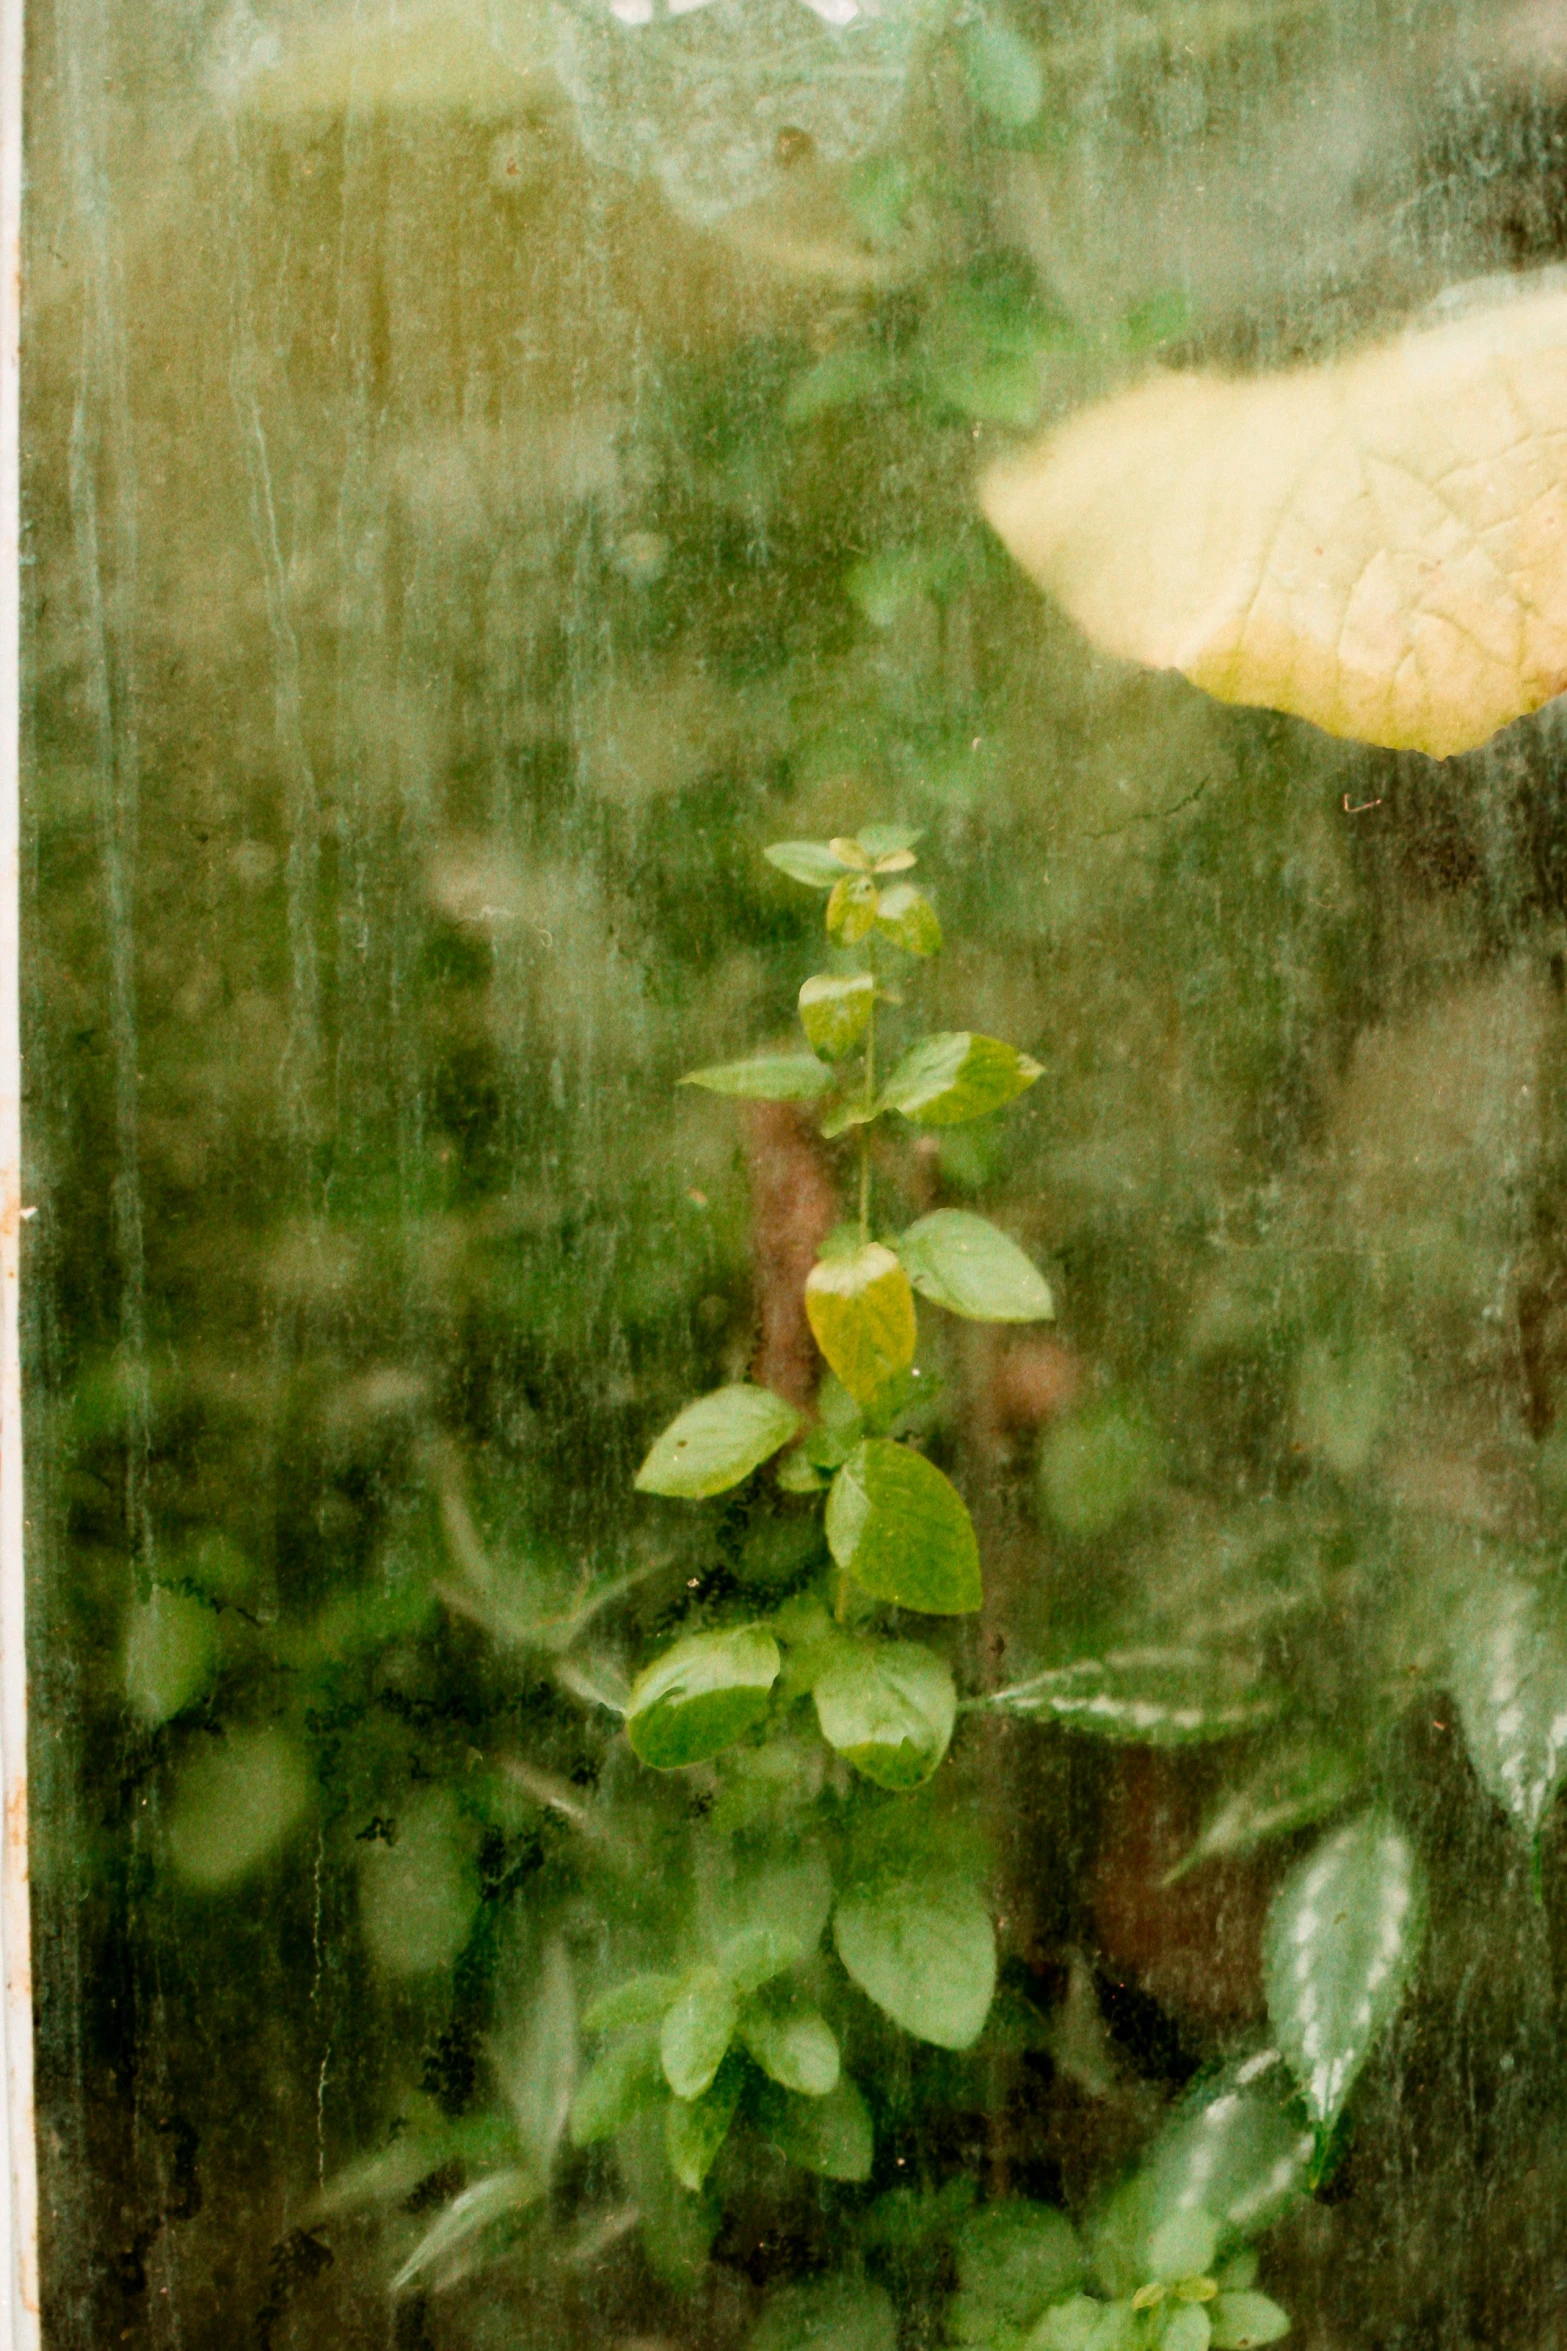 a yellow umbrella is seen through the window